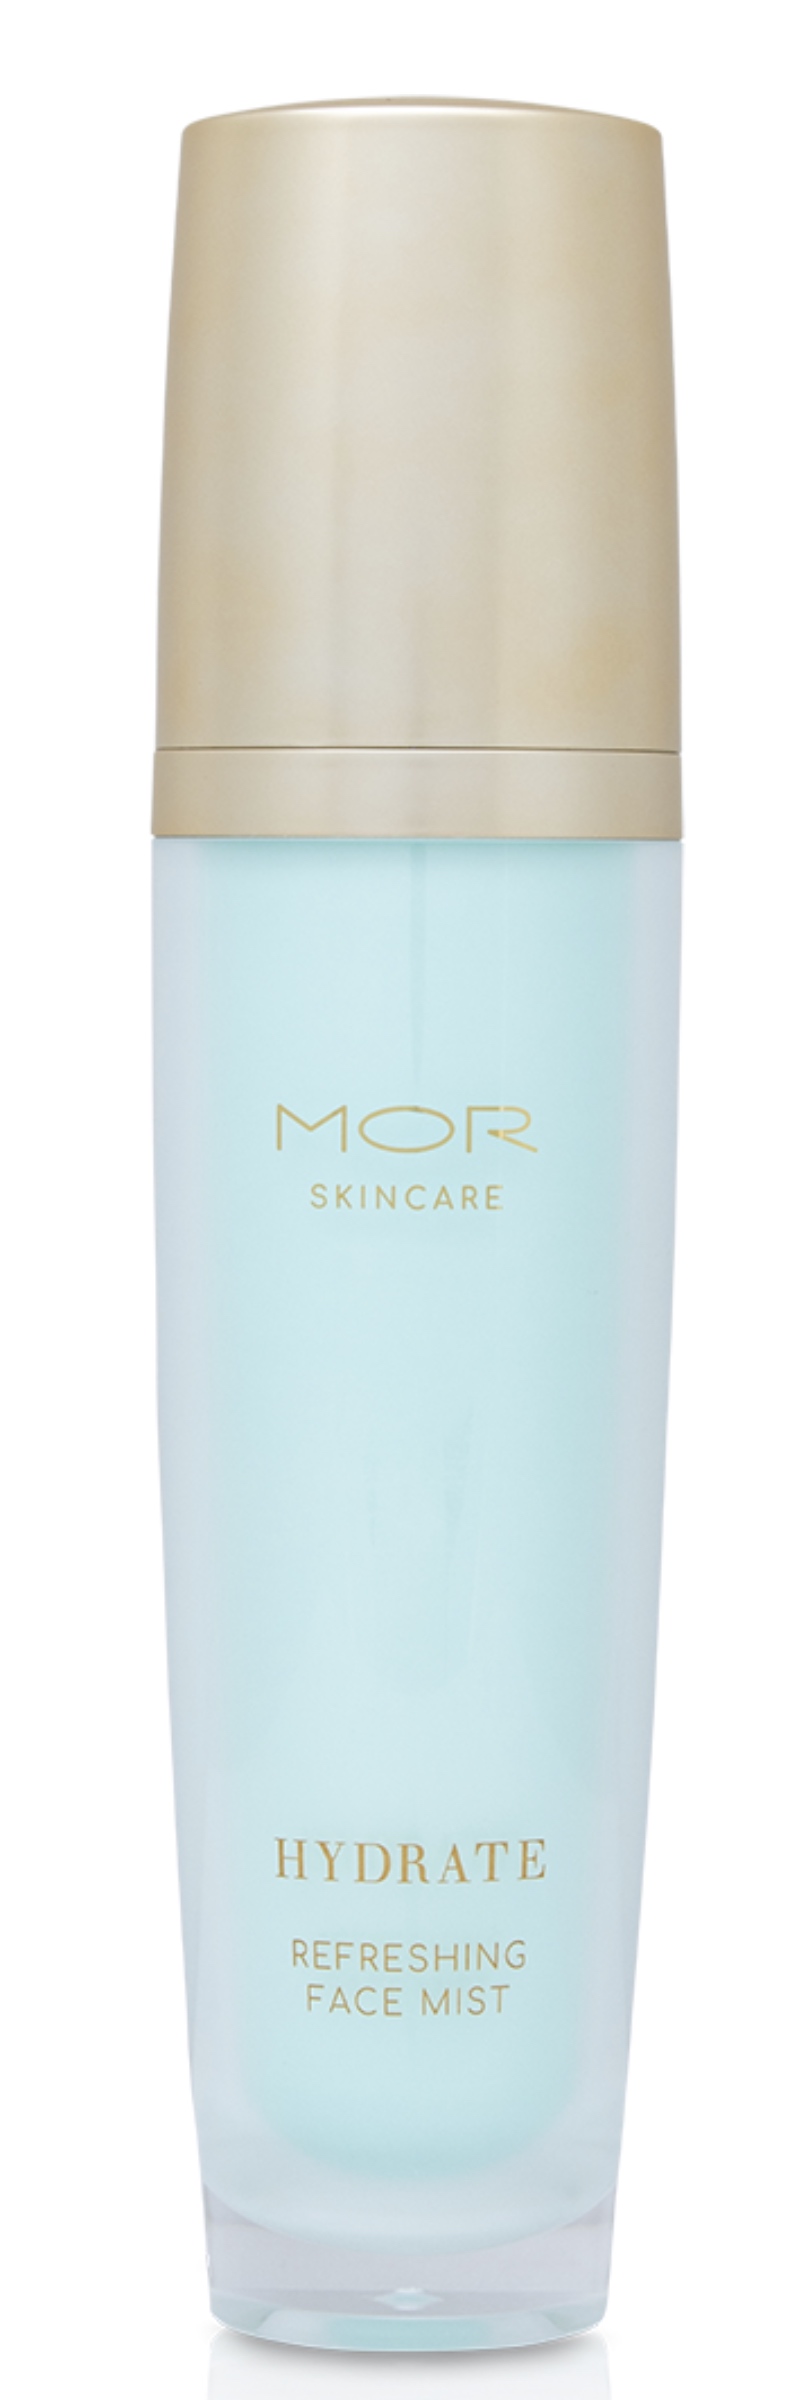 MOR Skincare Hydrate Refreshing Mist, $44.95